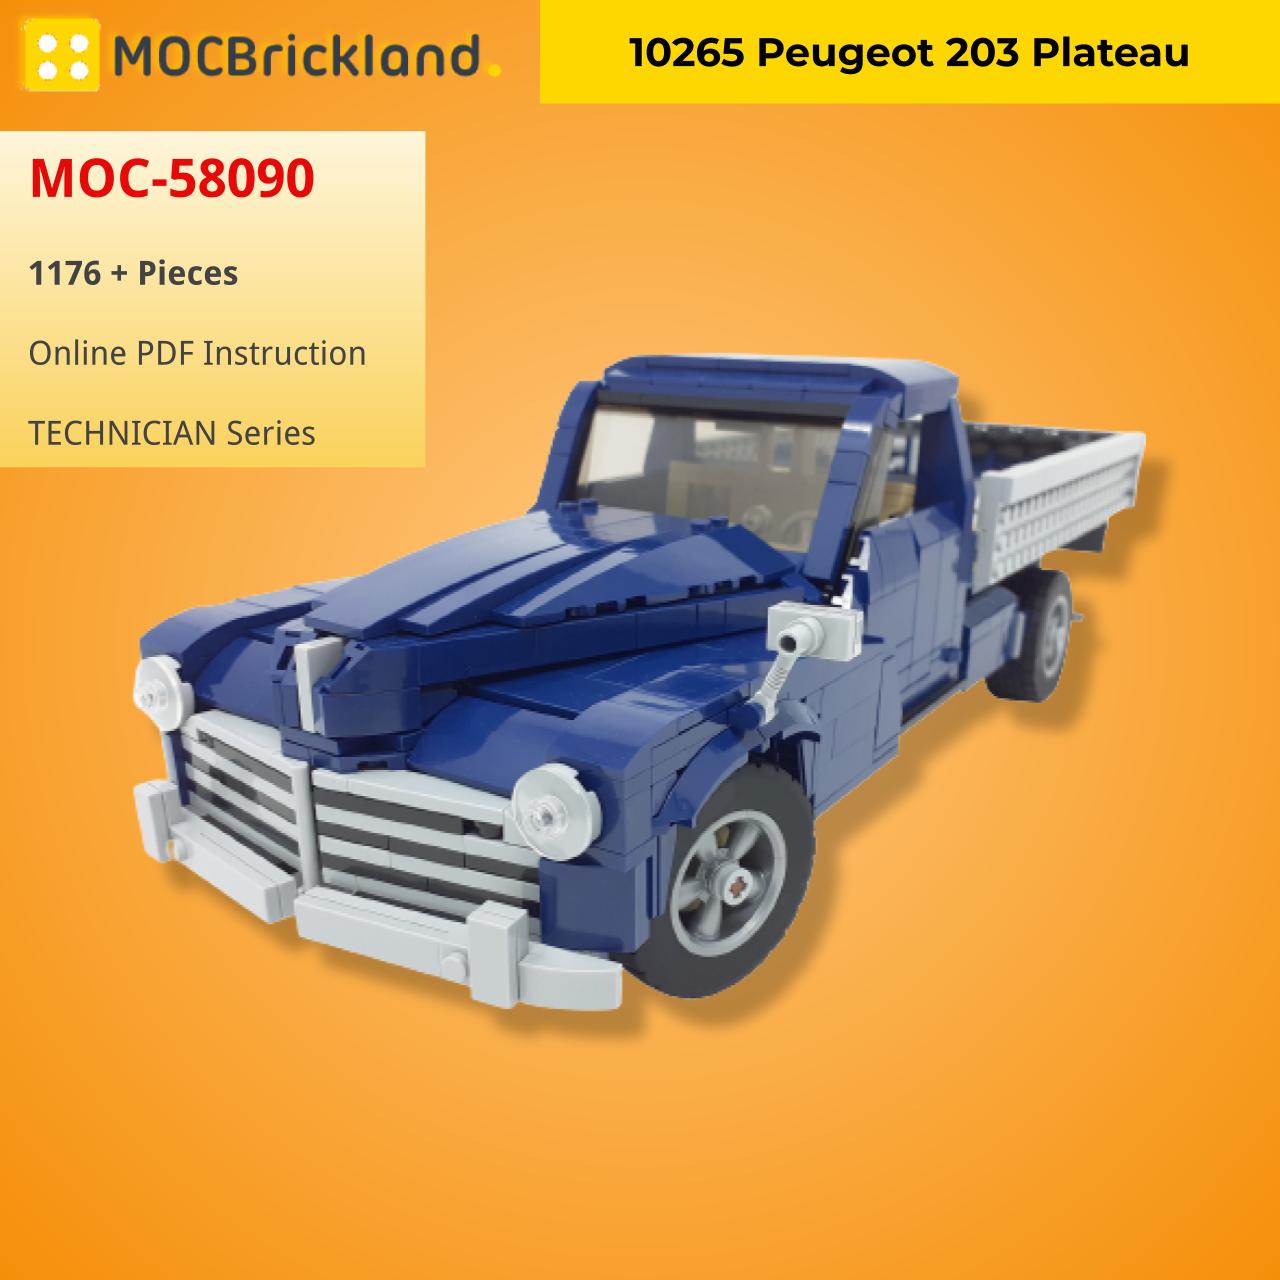 MOCBRICKLAND MOC-58090 10265 Peugeot 203 Plateau